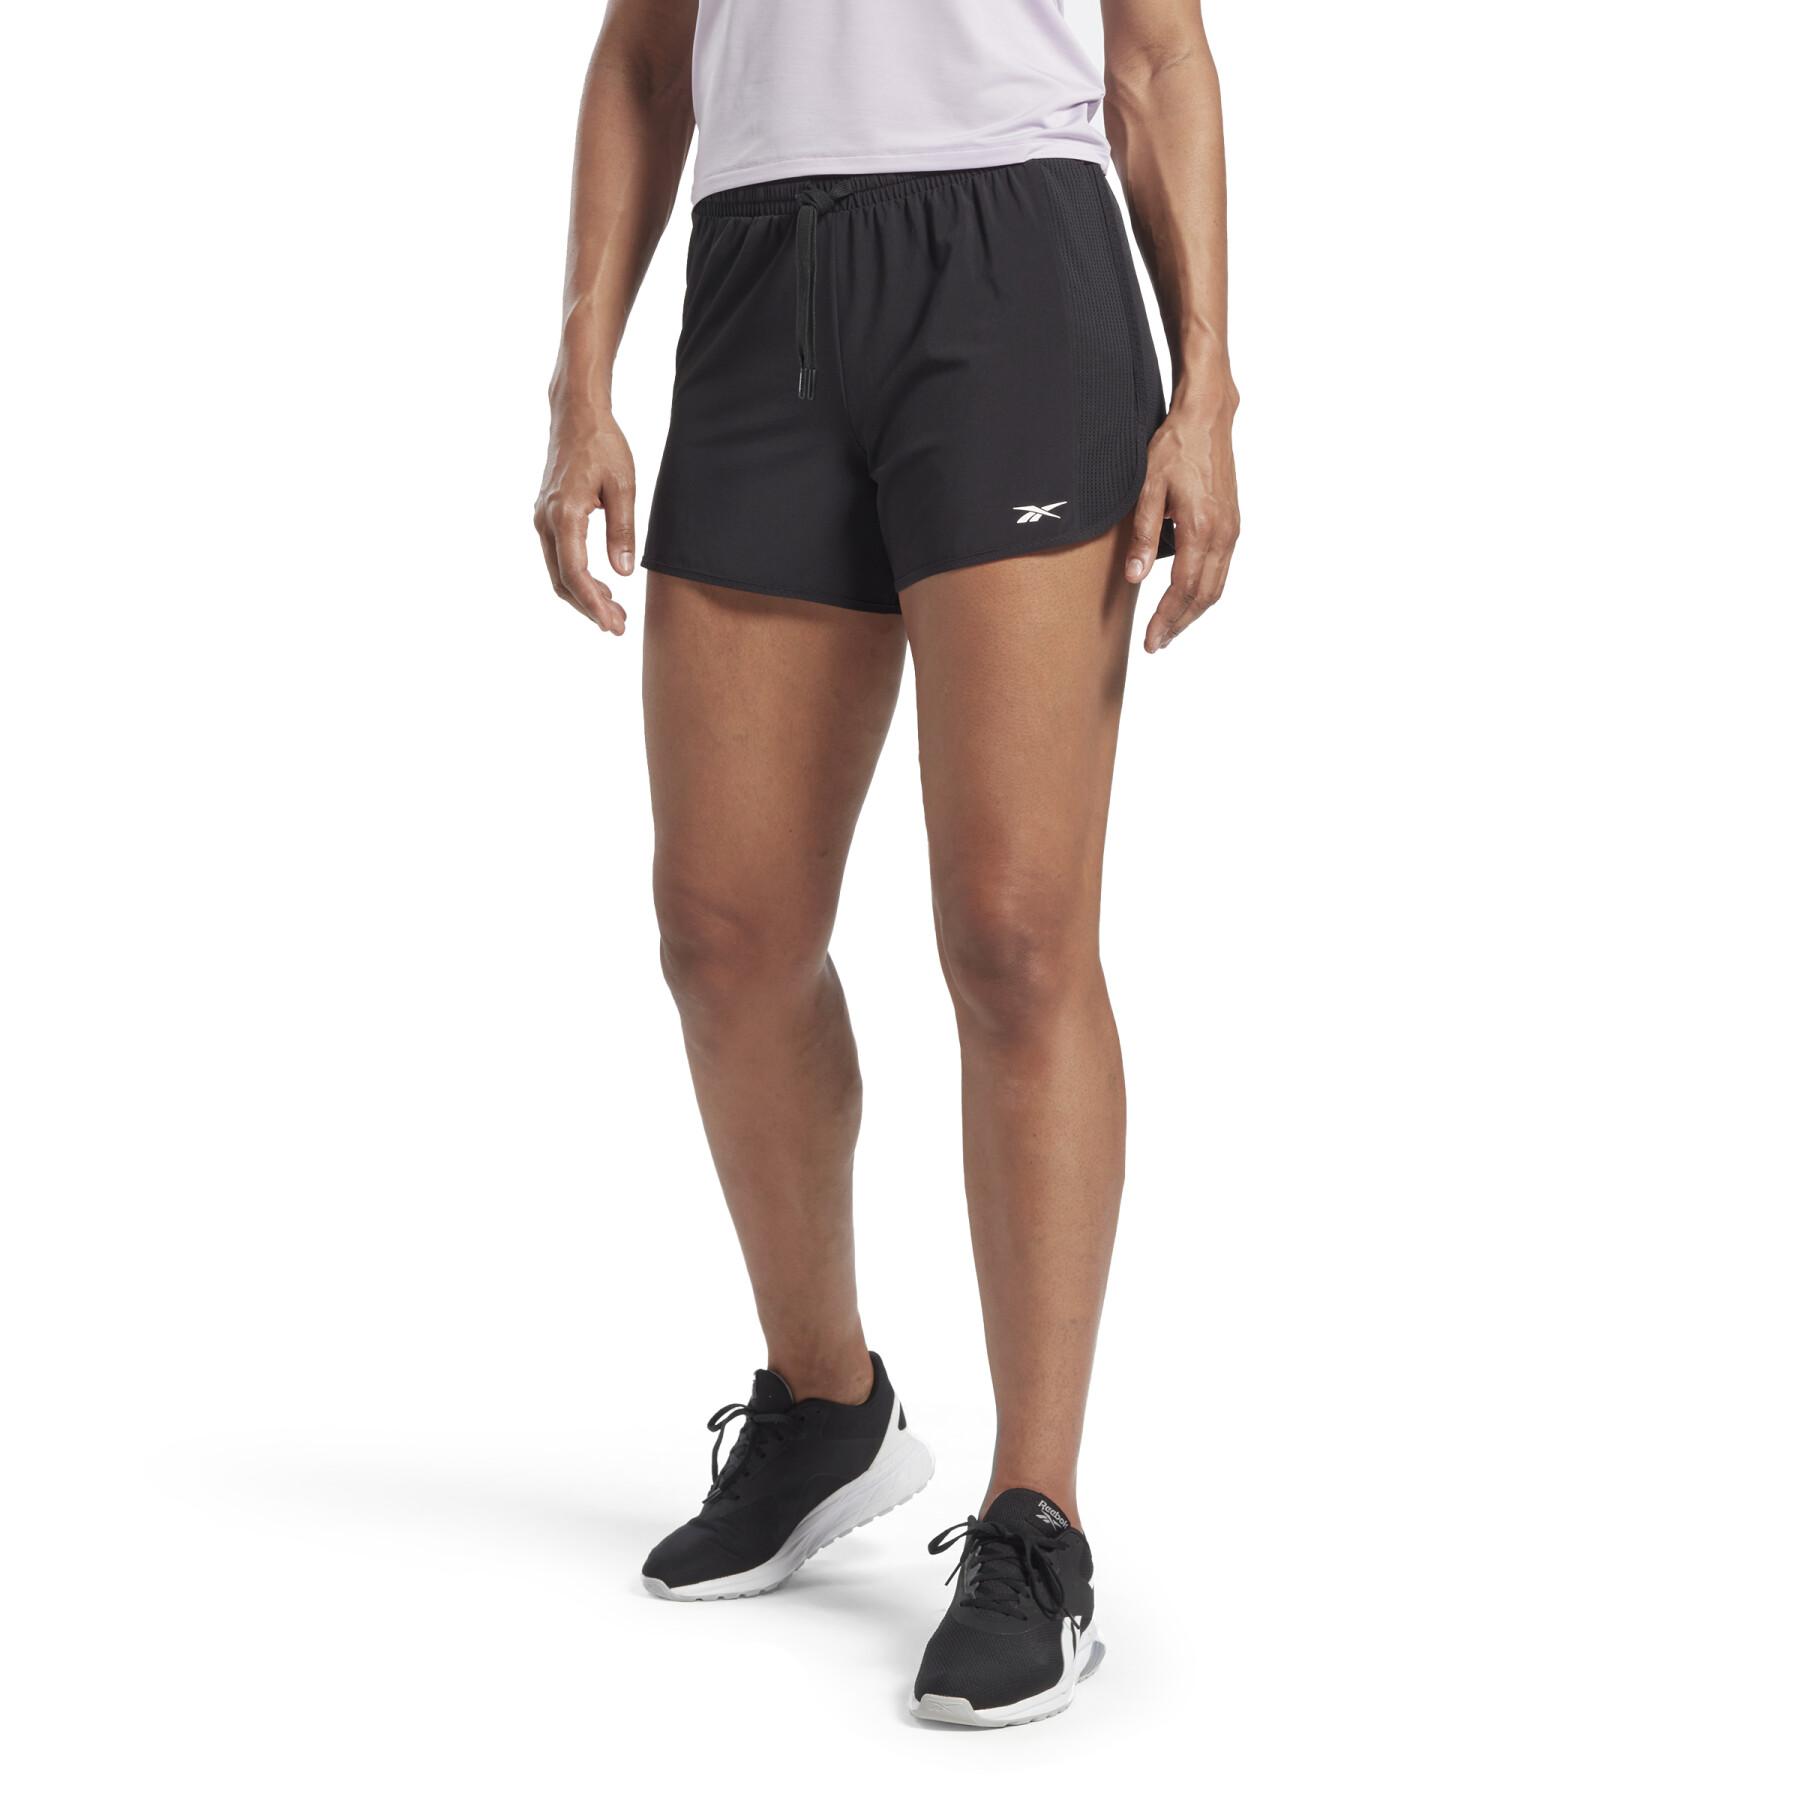 Women's shorts Reebok Athlete